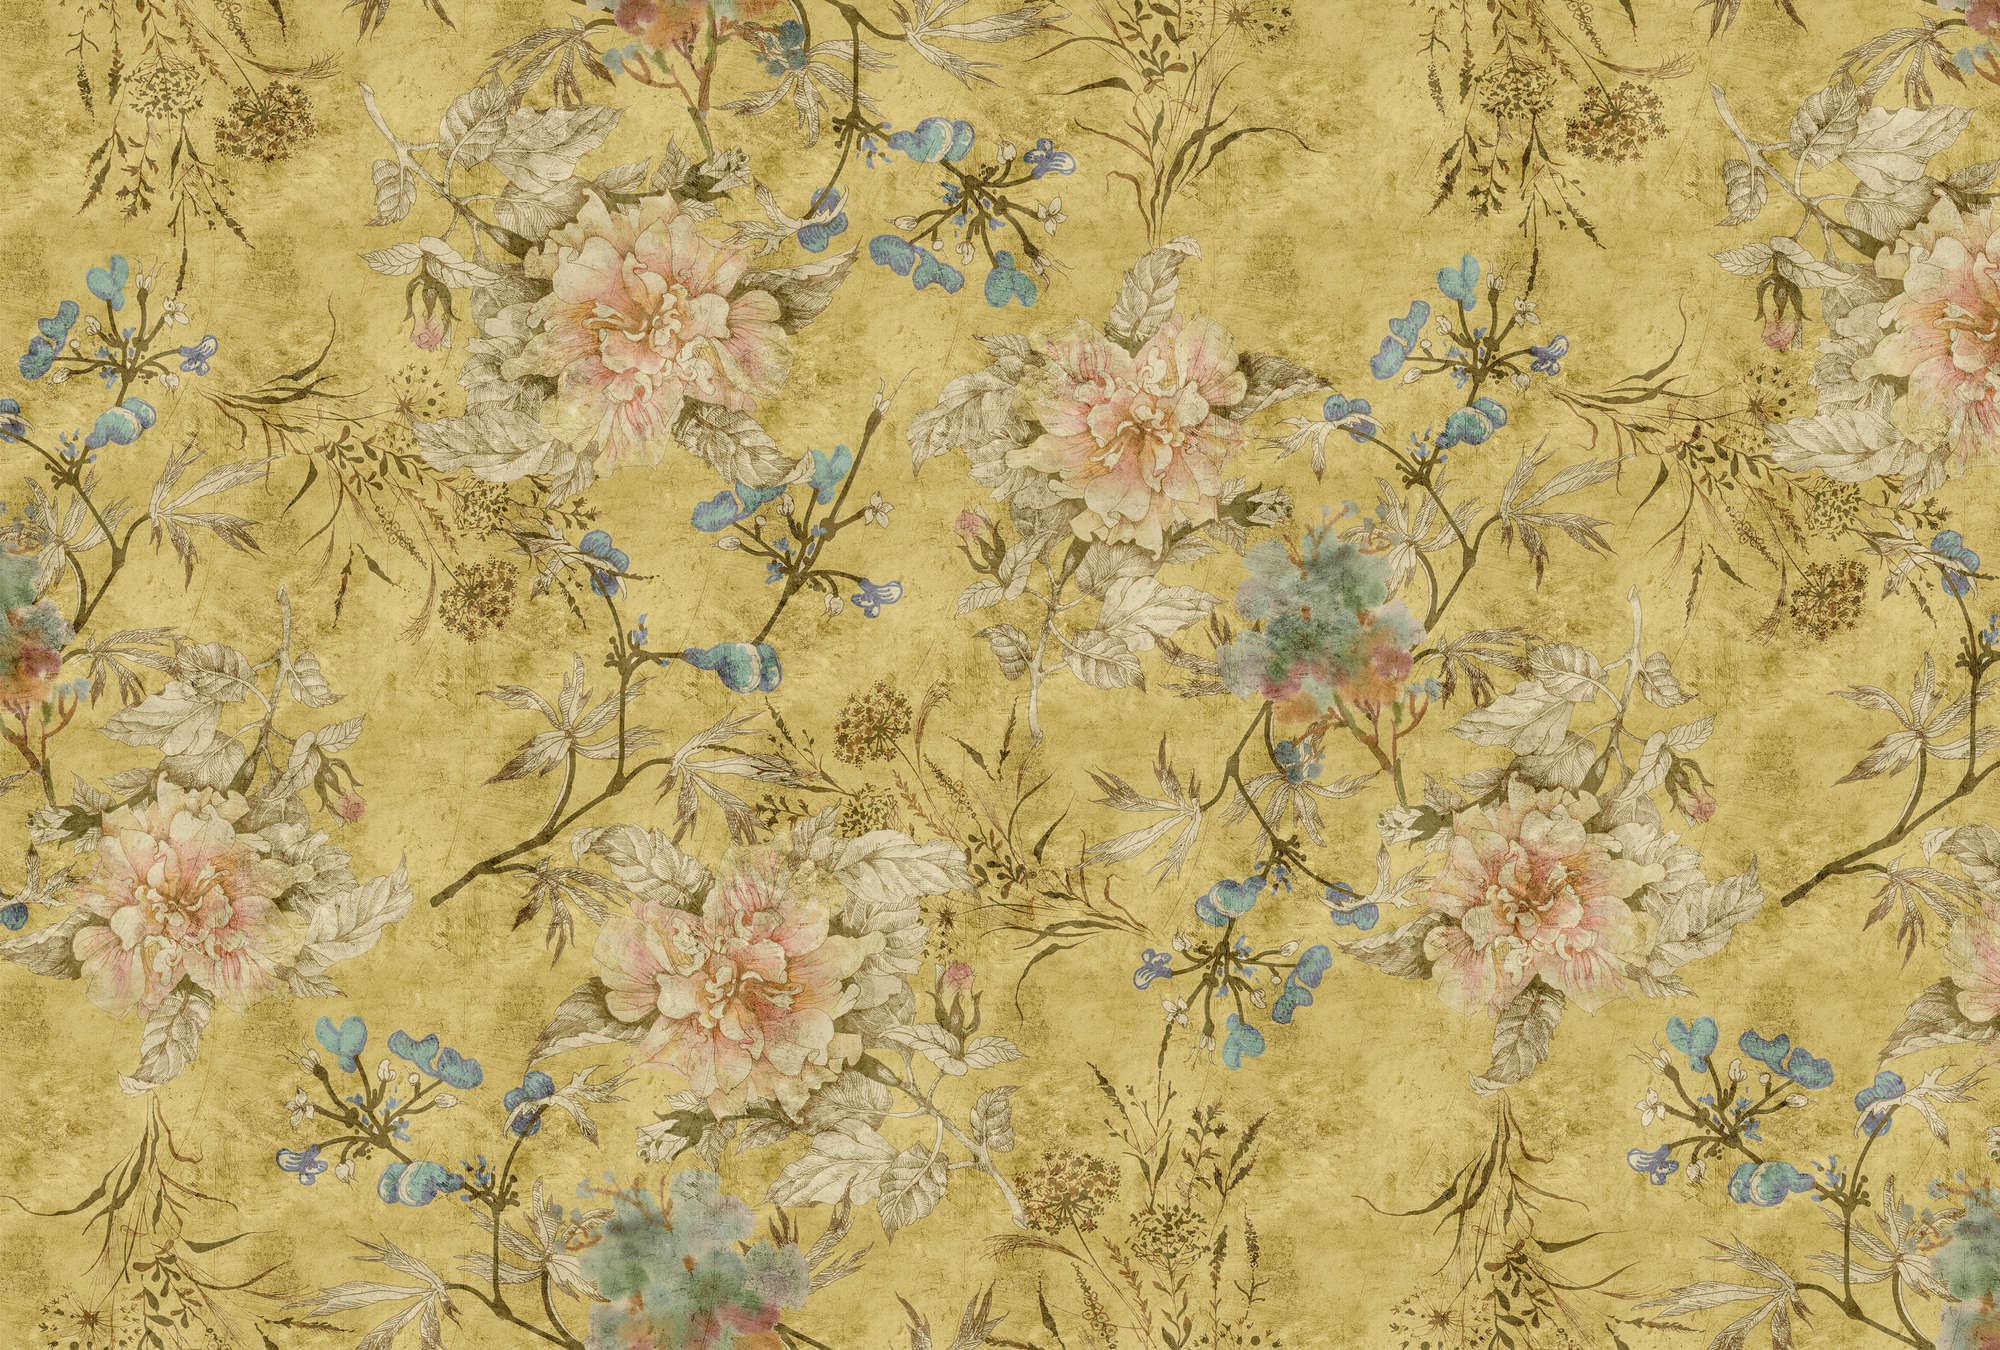             Tenderblossom 2 - Papier peint fleuri vintage - texture grattée - jaune | Intissé lisse mat
        